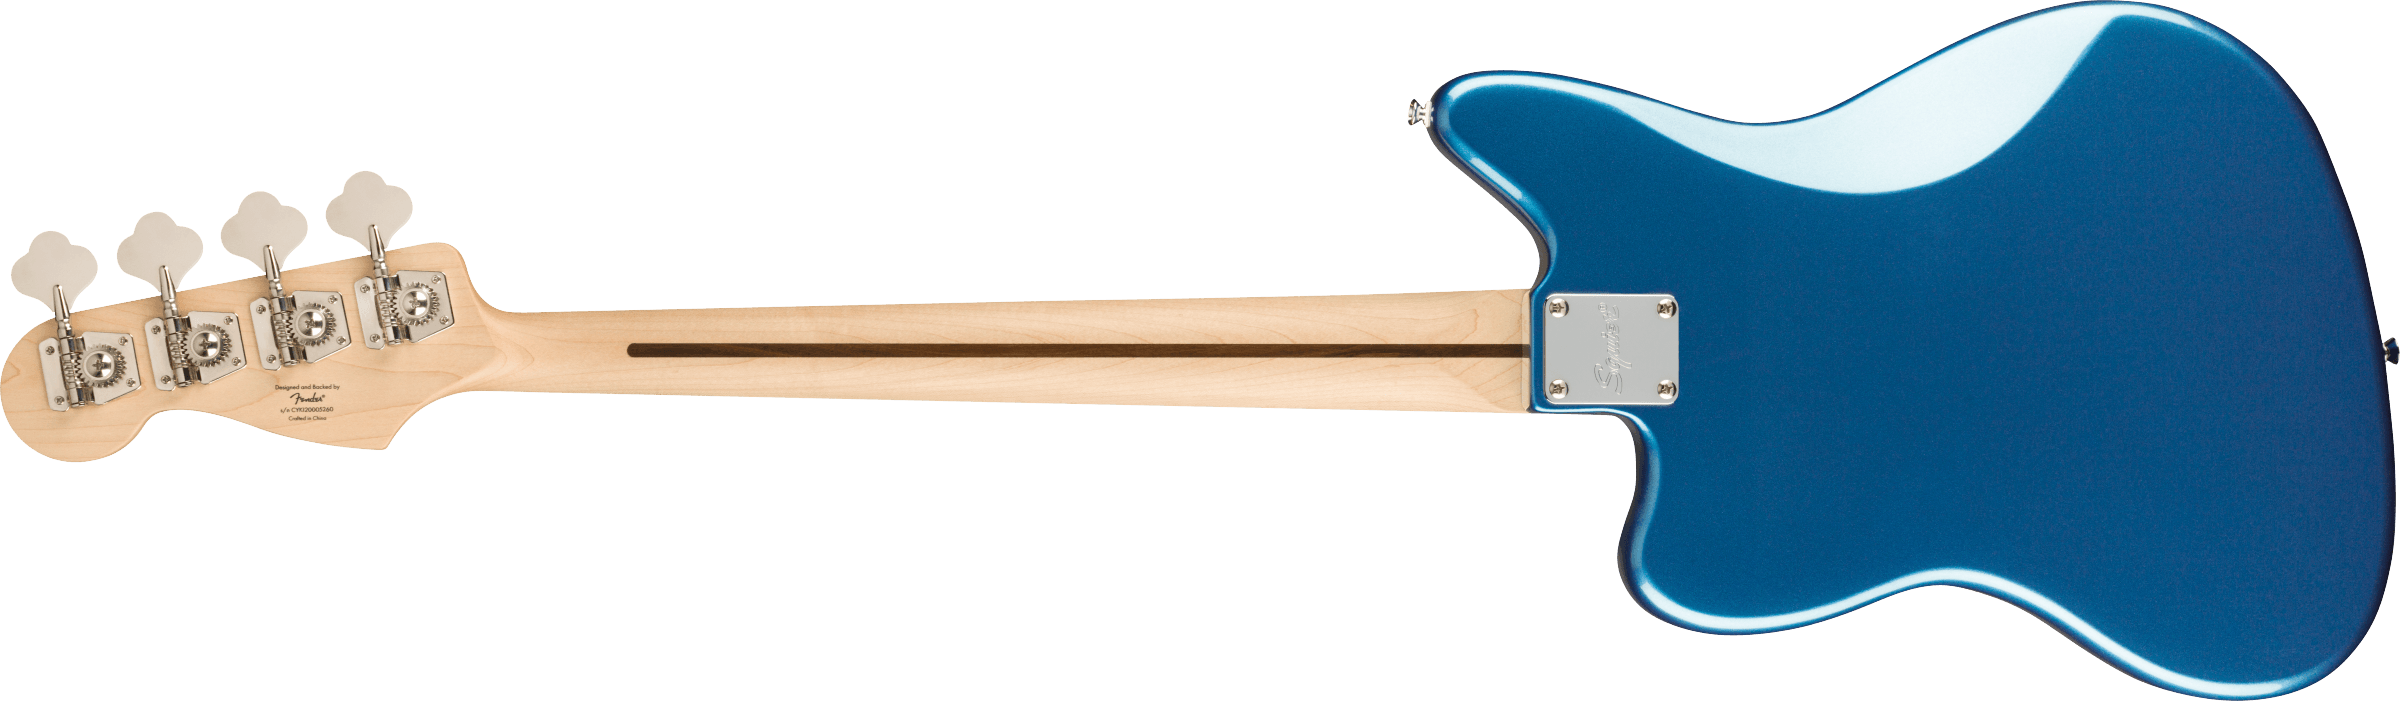 Squier Jaguar Bass Affinity 2021 Mn - Lake Placid Blue - Solid body elektrische bas - Variation 1